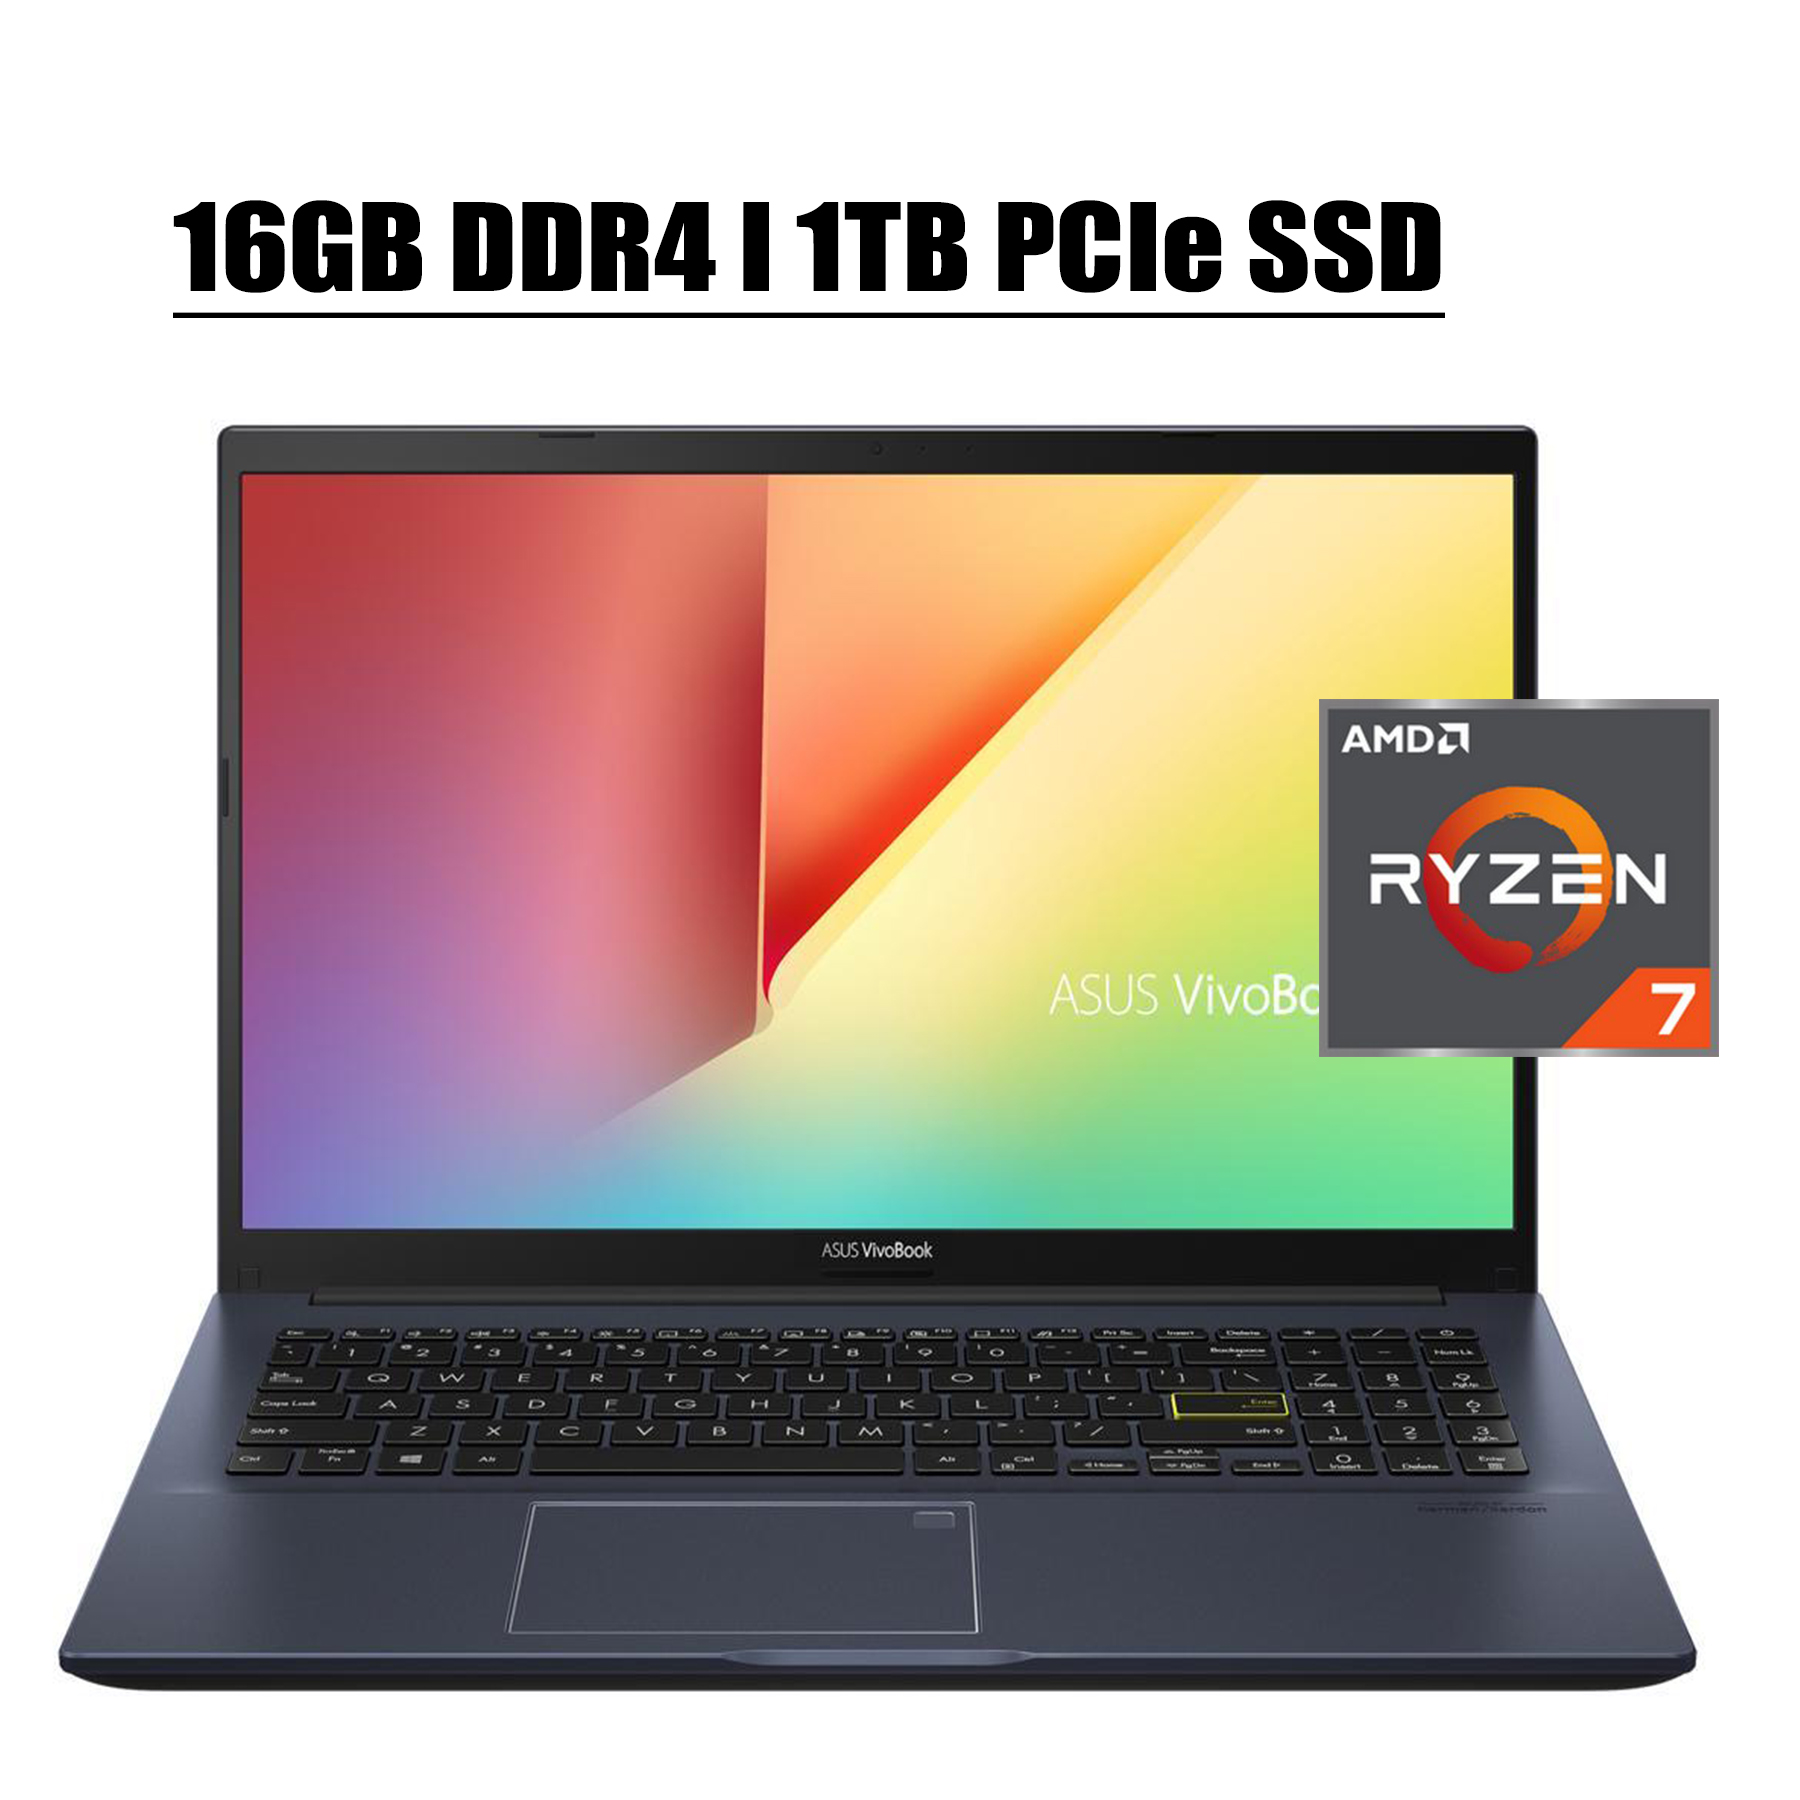 2020 Flagship ASUS VivoBook 15 F513 Thin and Light Premium Laptop Computer I 15.6" FHD I AMD 6-Core Ryzen 7 4700U I 16GB DDR4 1TB PCIe SSD I Fingerprint&nbsp;Backlit Webcam Win 10 - image 1 of 9